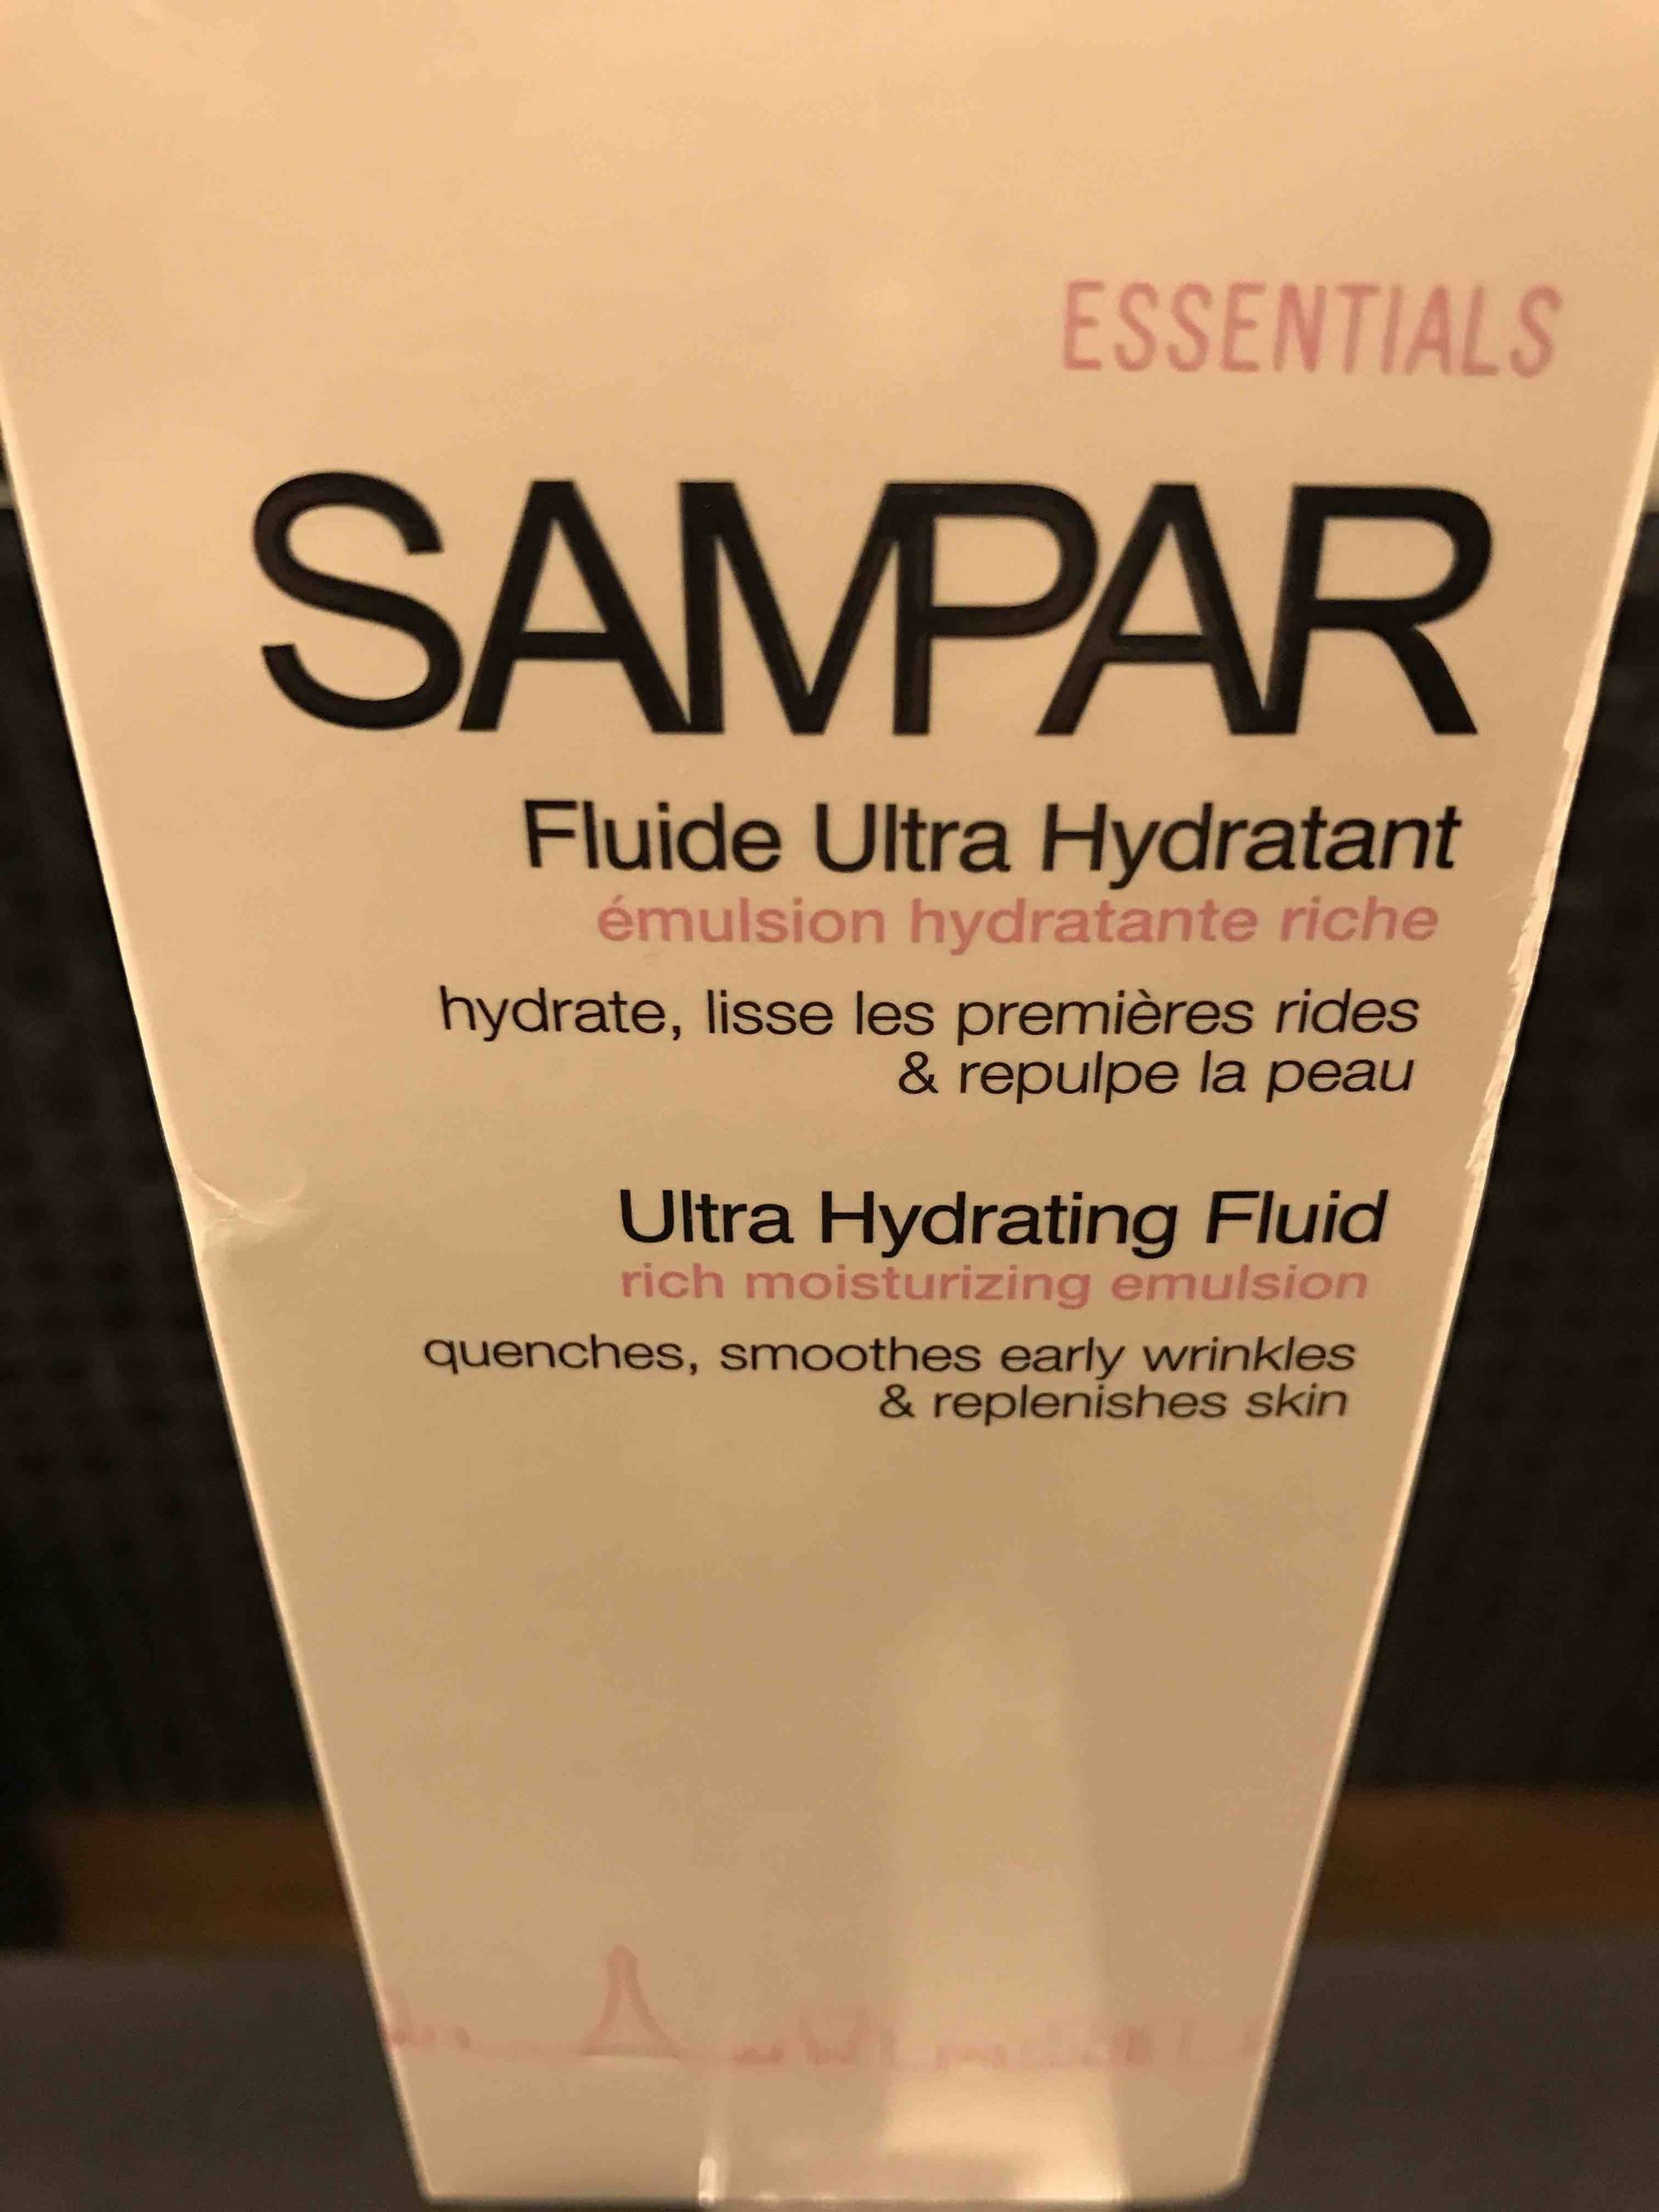 SAMPAR - Essentials - Fluide ultra hydratant